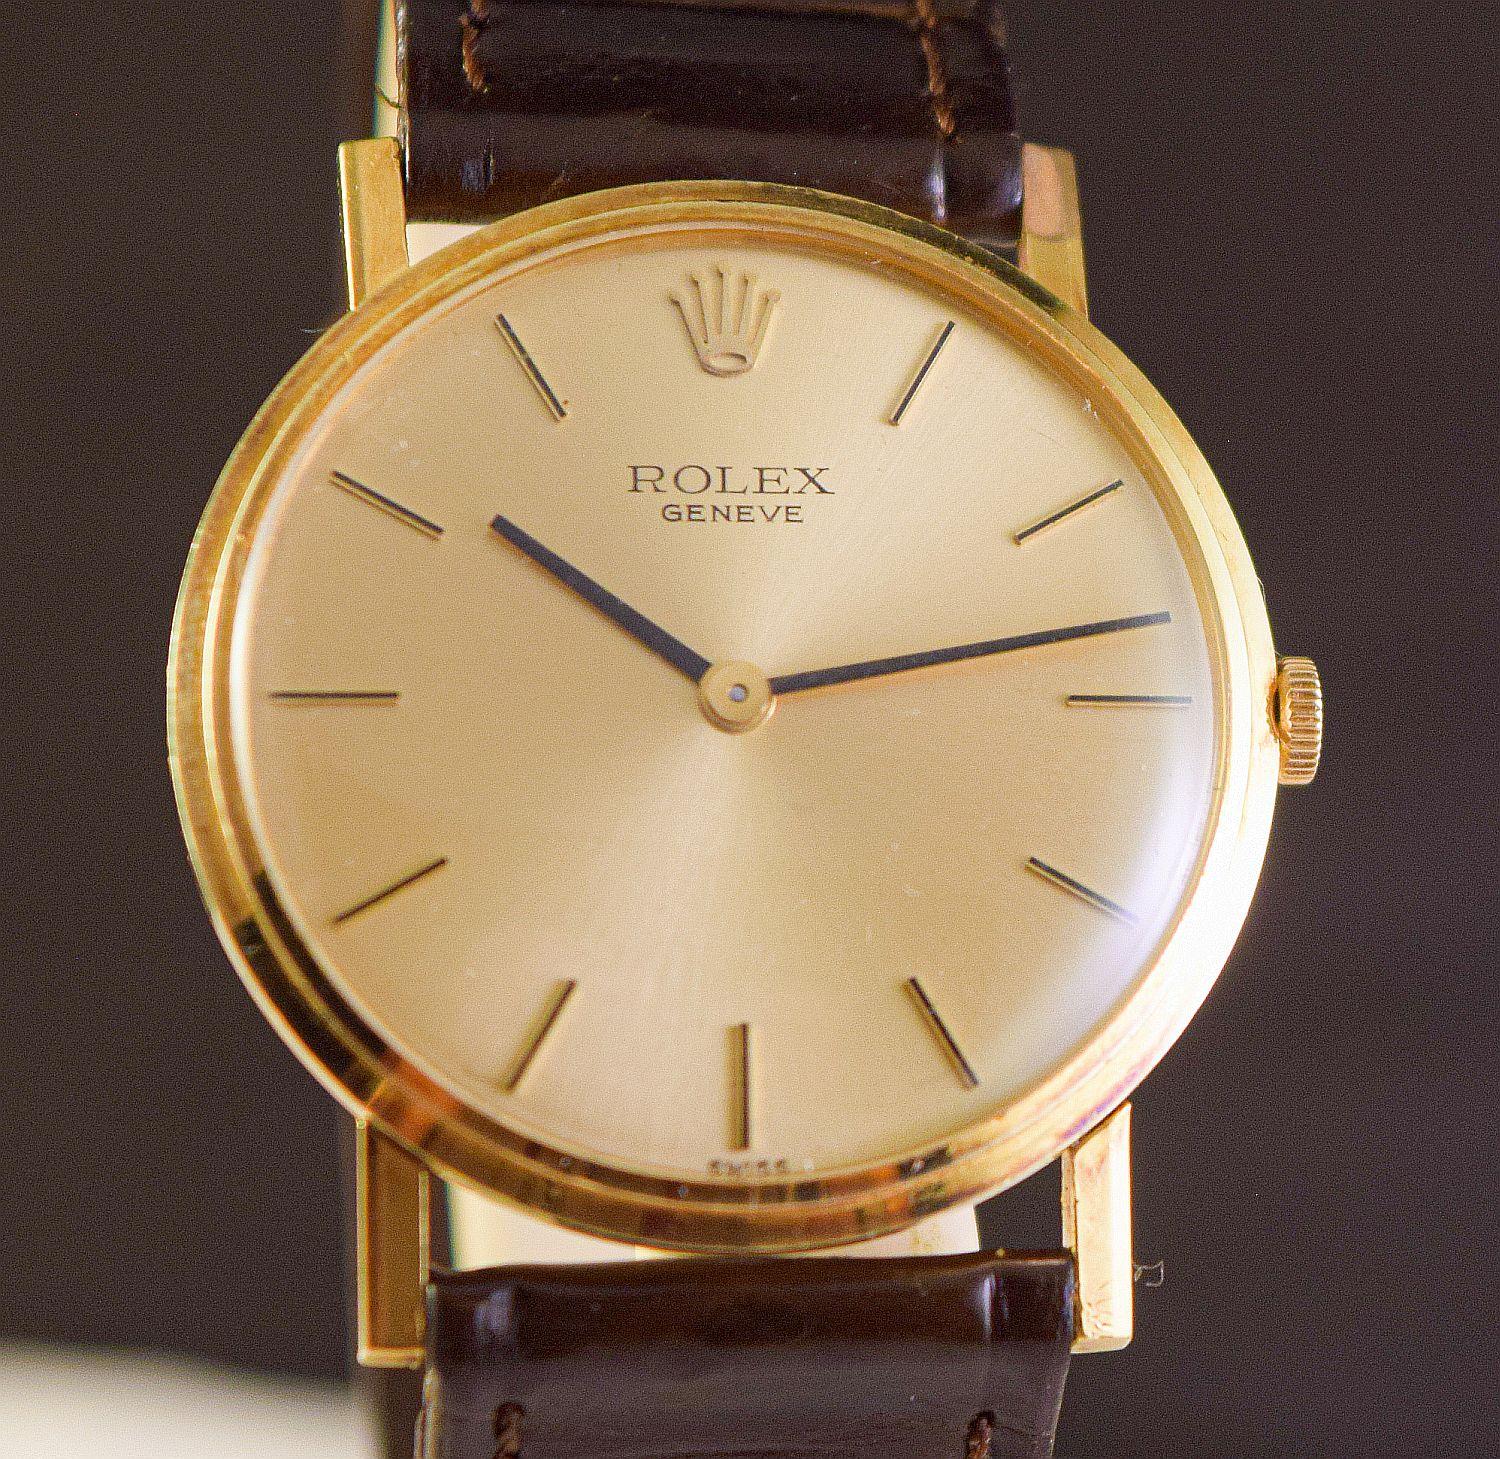 Rolex Geneve a very elegant 18 karat extra slim watch For Sale 1